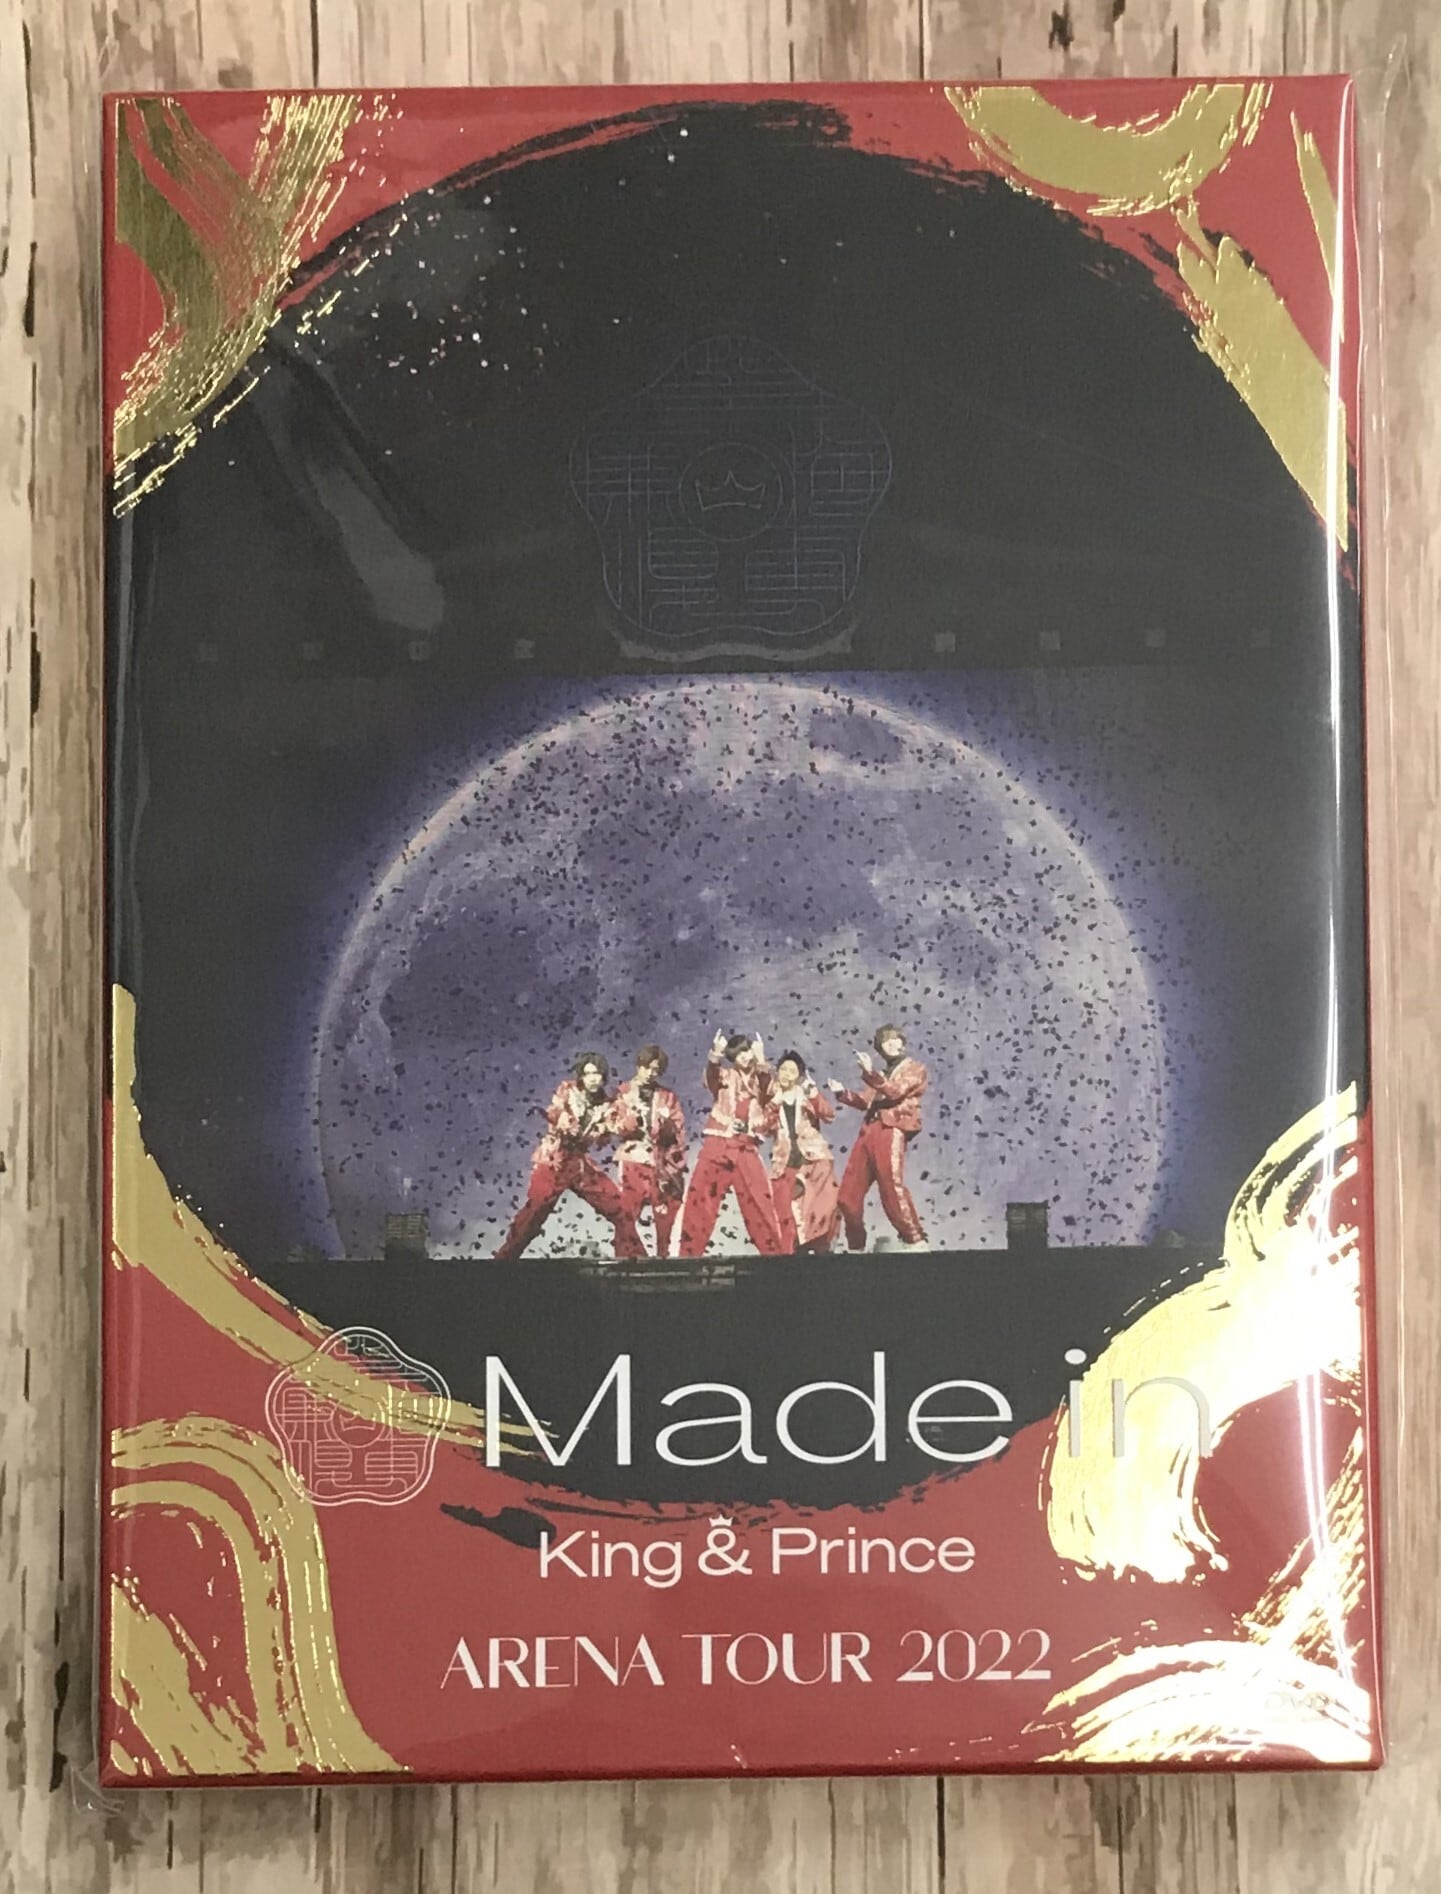 King ＆ Prince / King ＆ Prince ARENA TOUR 2022 ～Made in～ / 初回限定盤 (DVD) |  （株）フナヤマ　ＣＤオンラインショップ powered by BASE